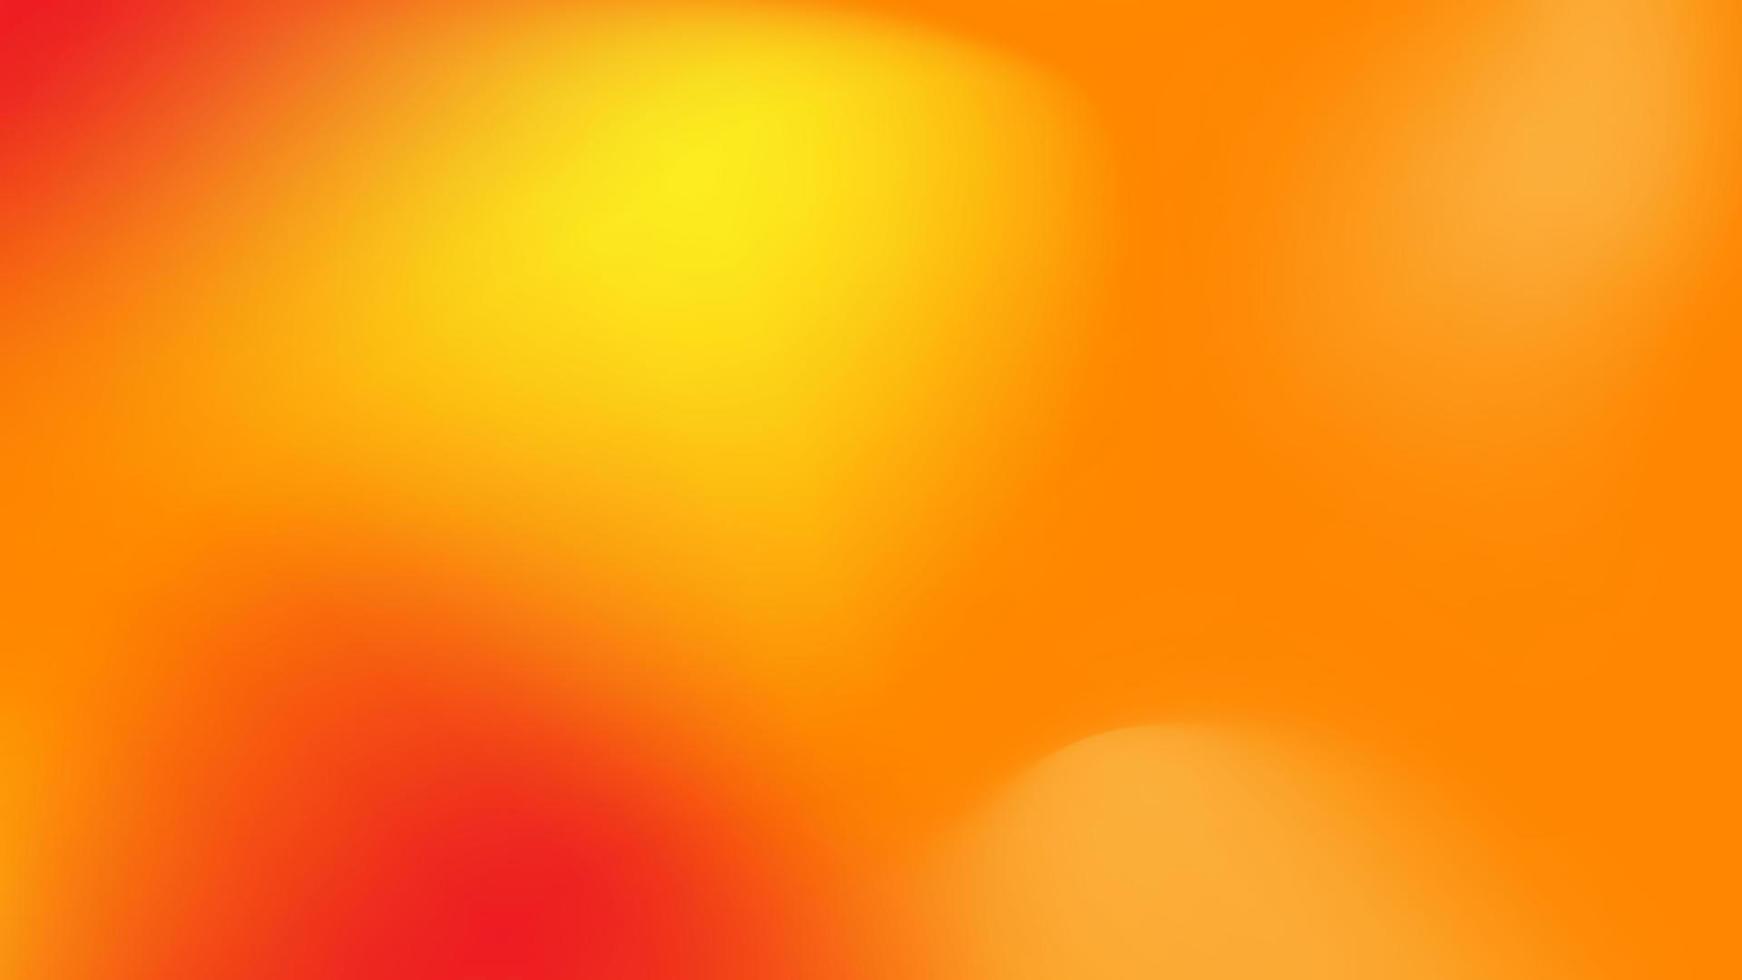 degradado suave, abstracto con tonos naranjas, fondo degradado, elemento decorativo de textura degradada borrosa, papel tapiz vectorial. vector